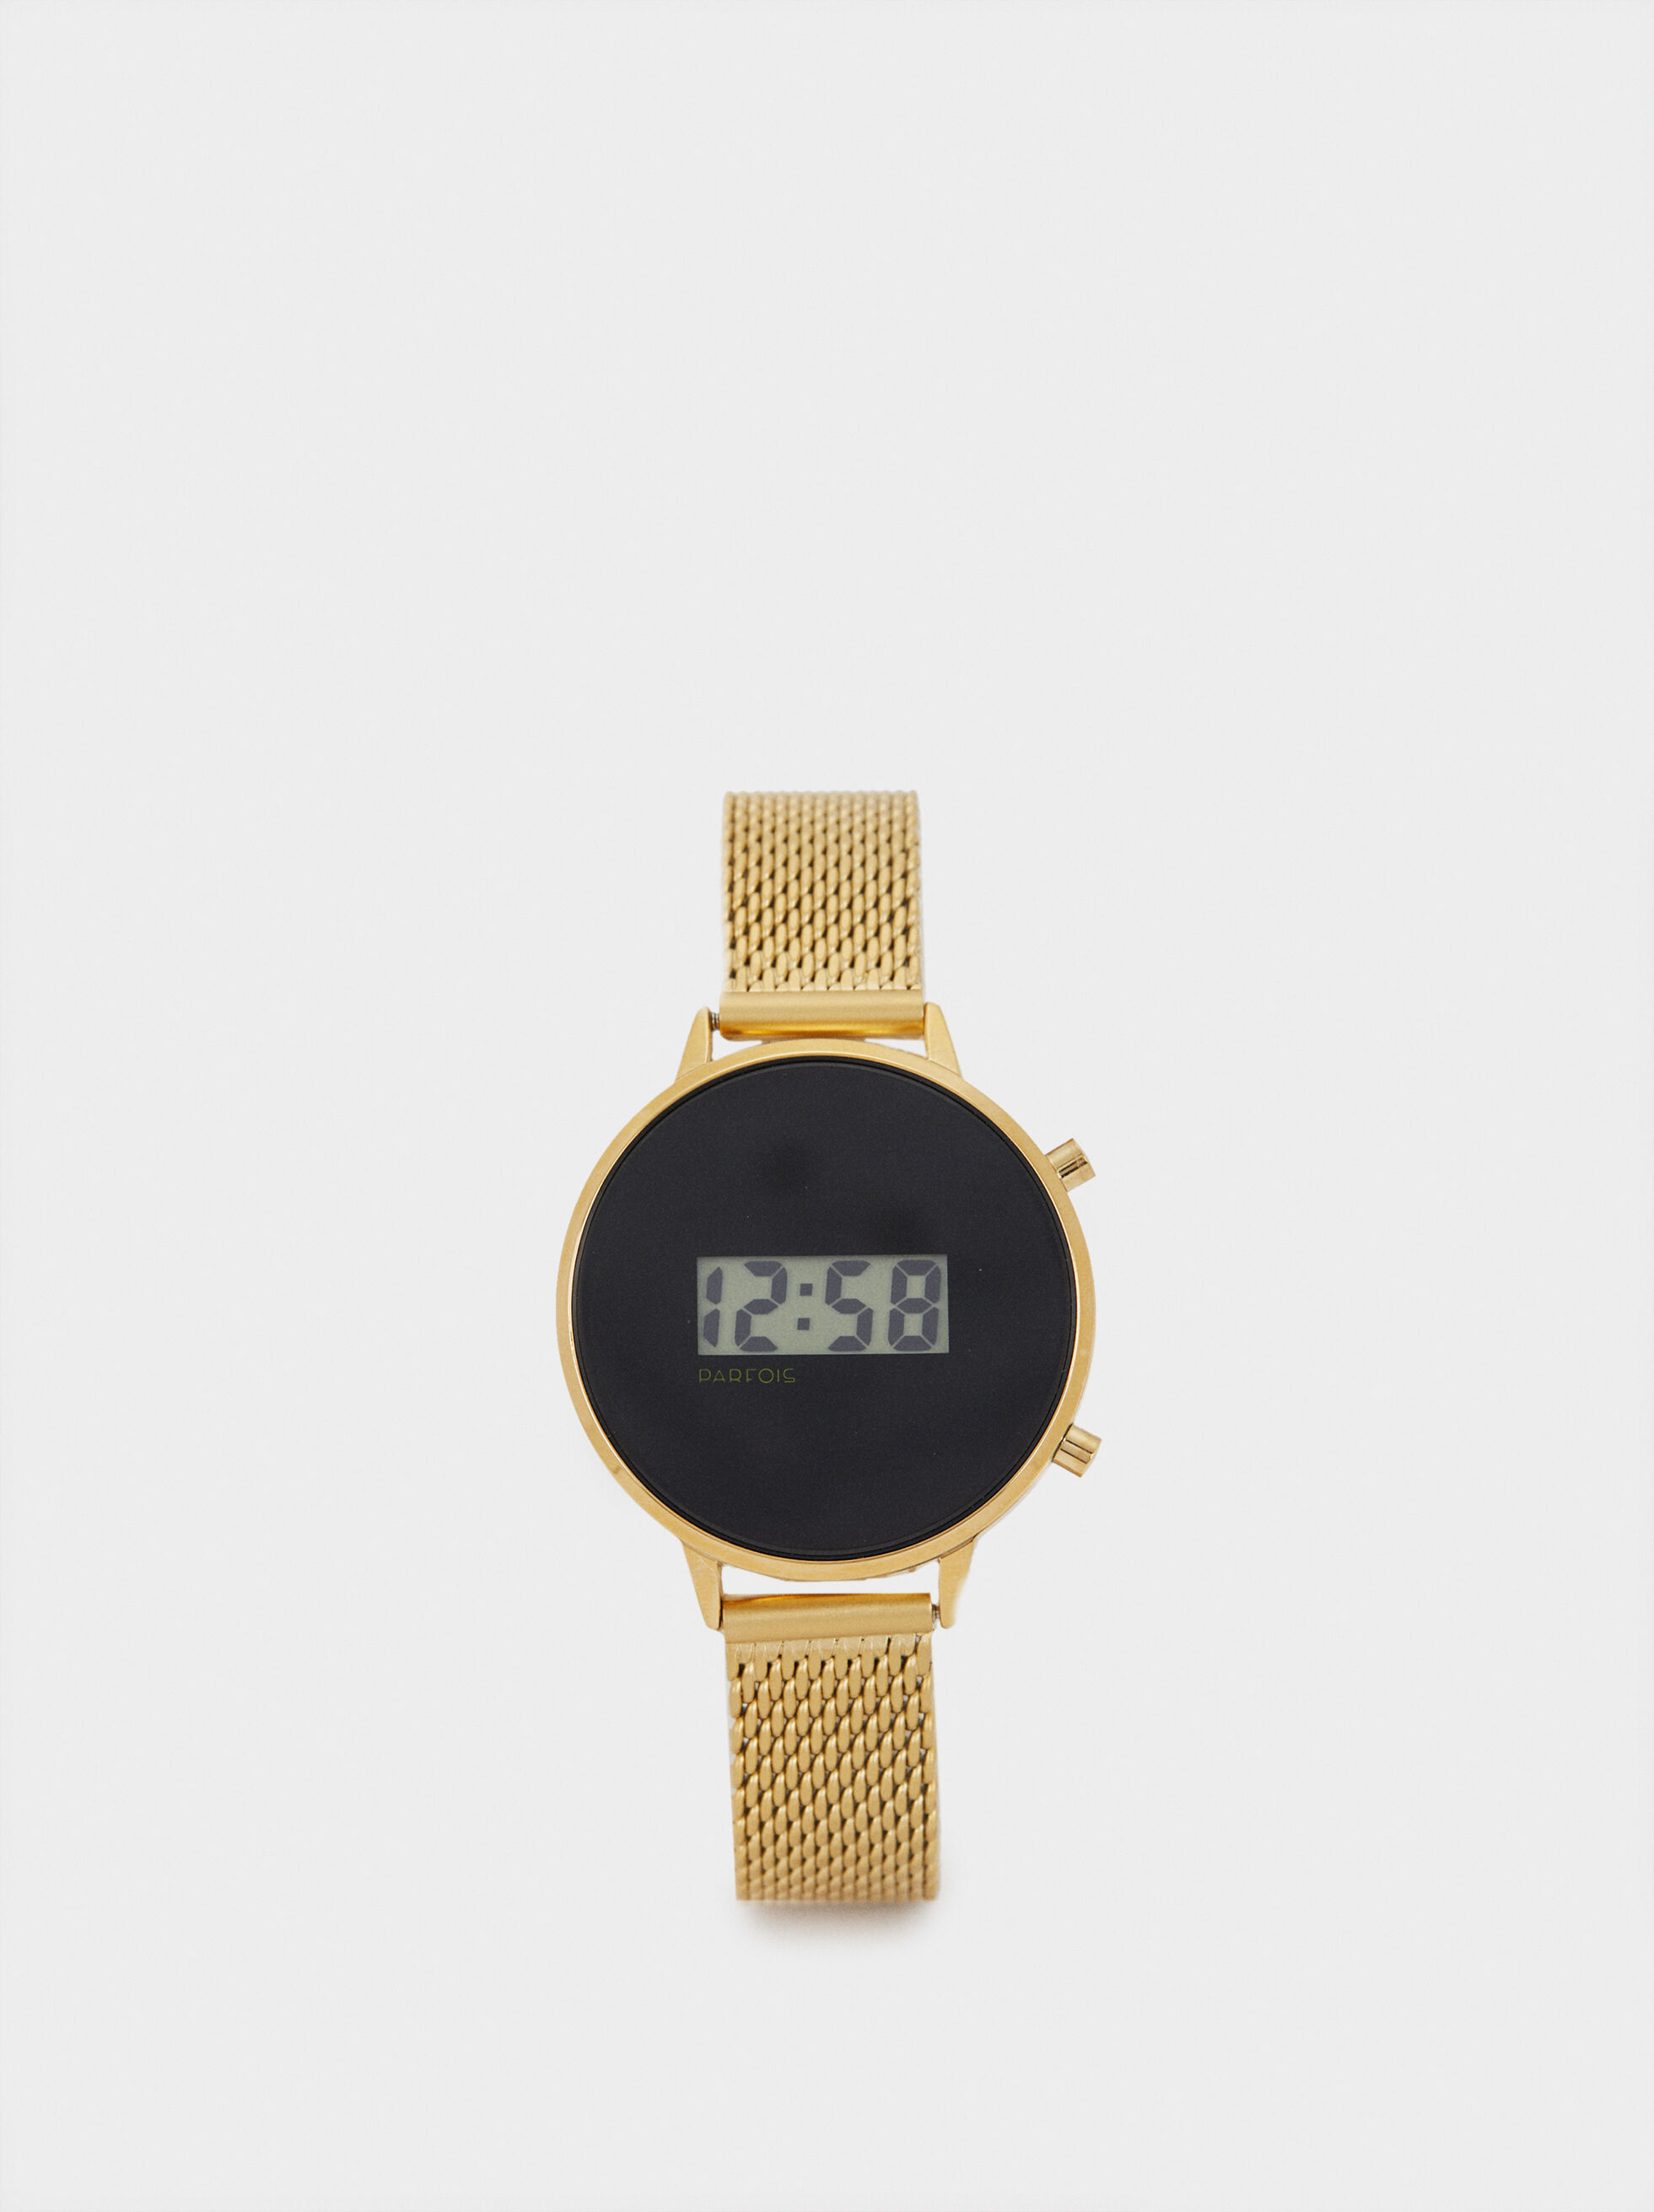 digital watch wristband